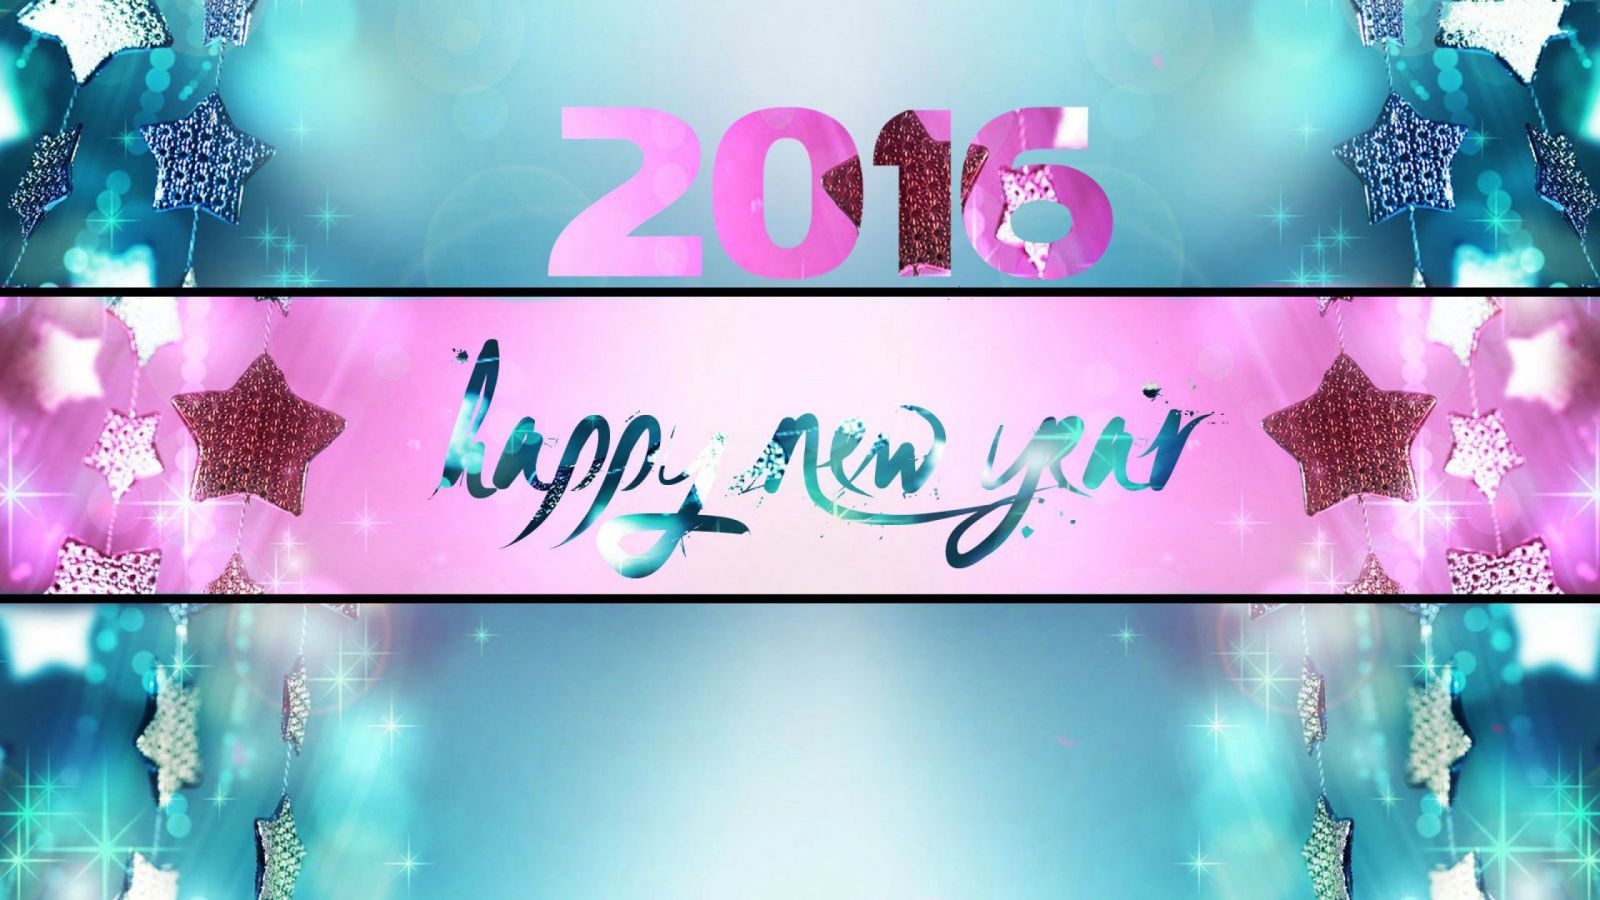 hinh-anh-tet-2016-xuan-2016-happy-new-year-2016-2